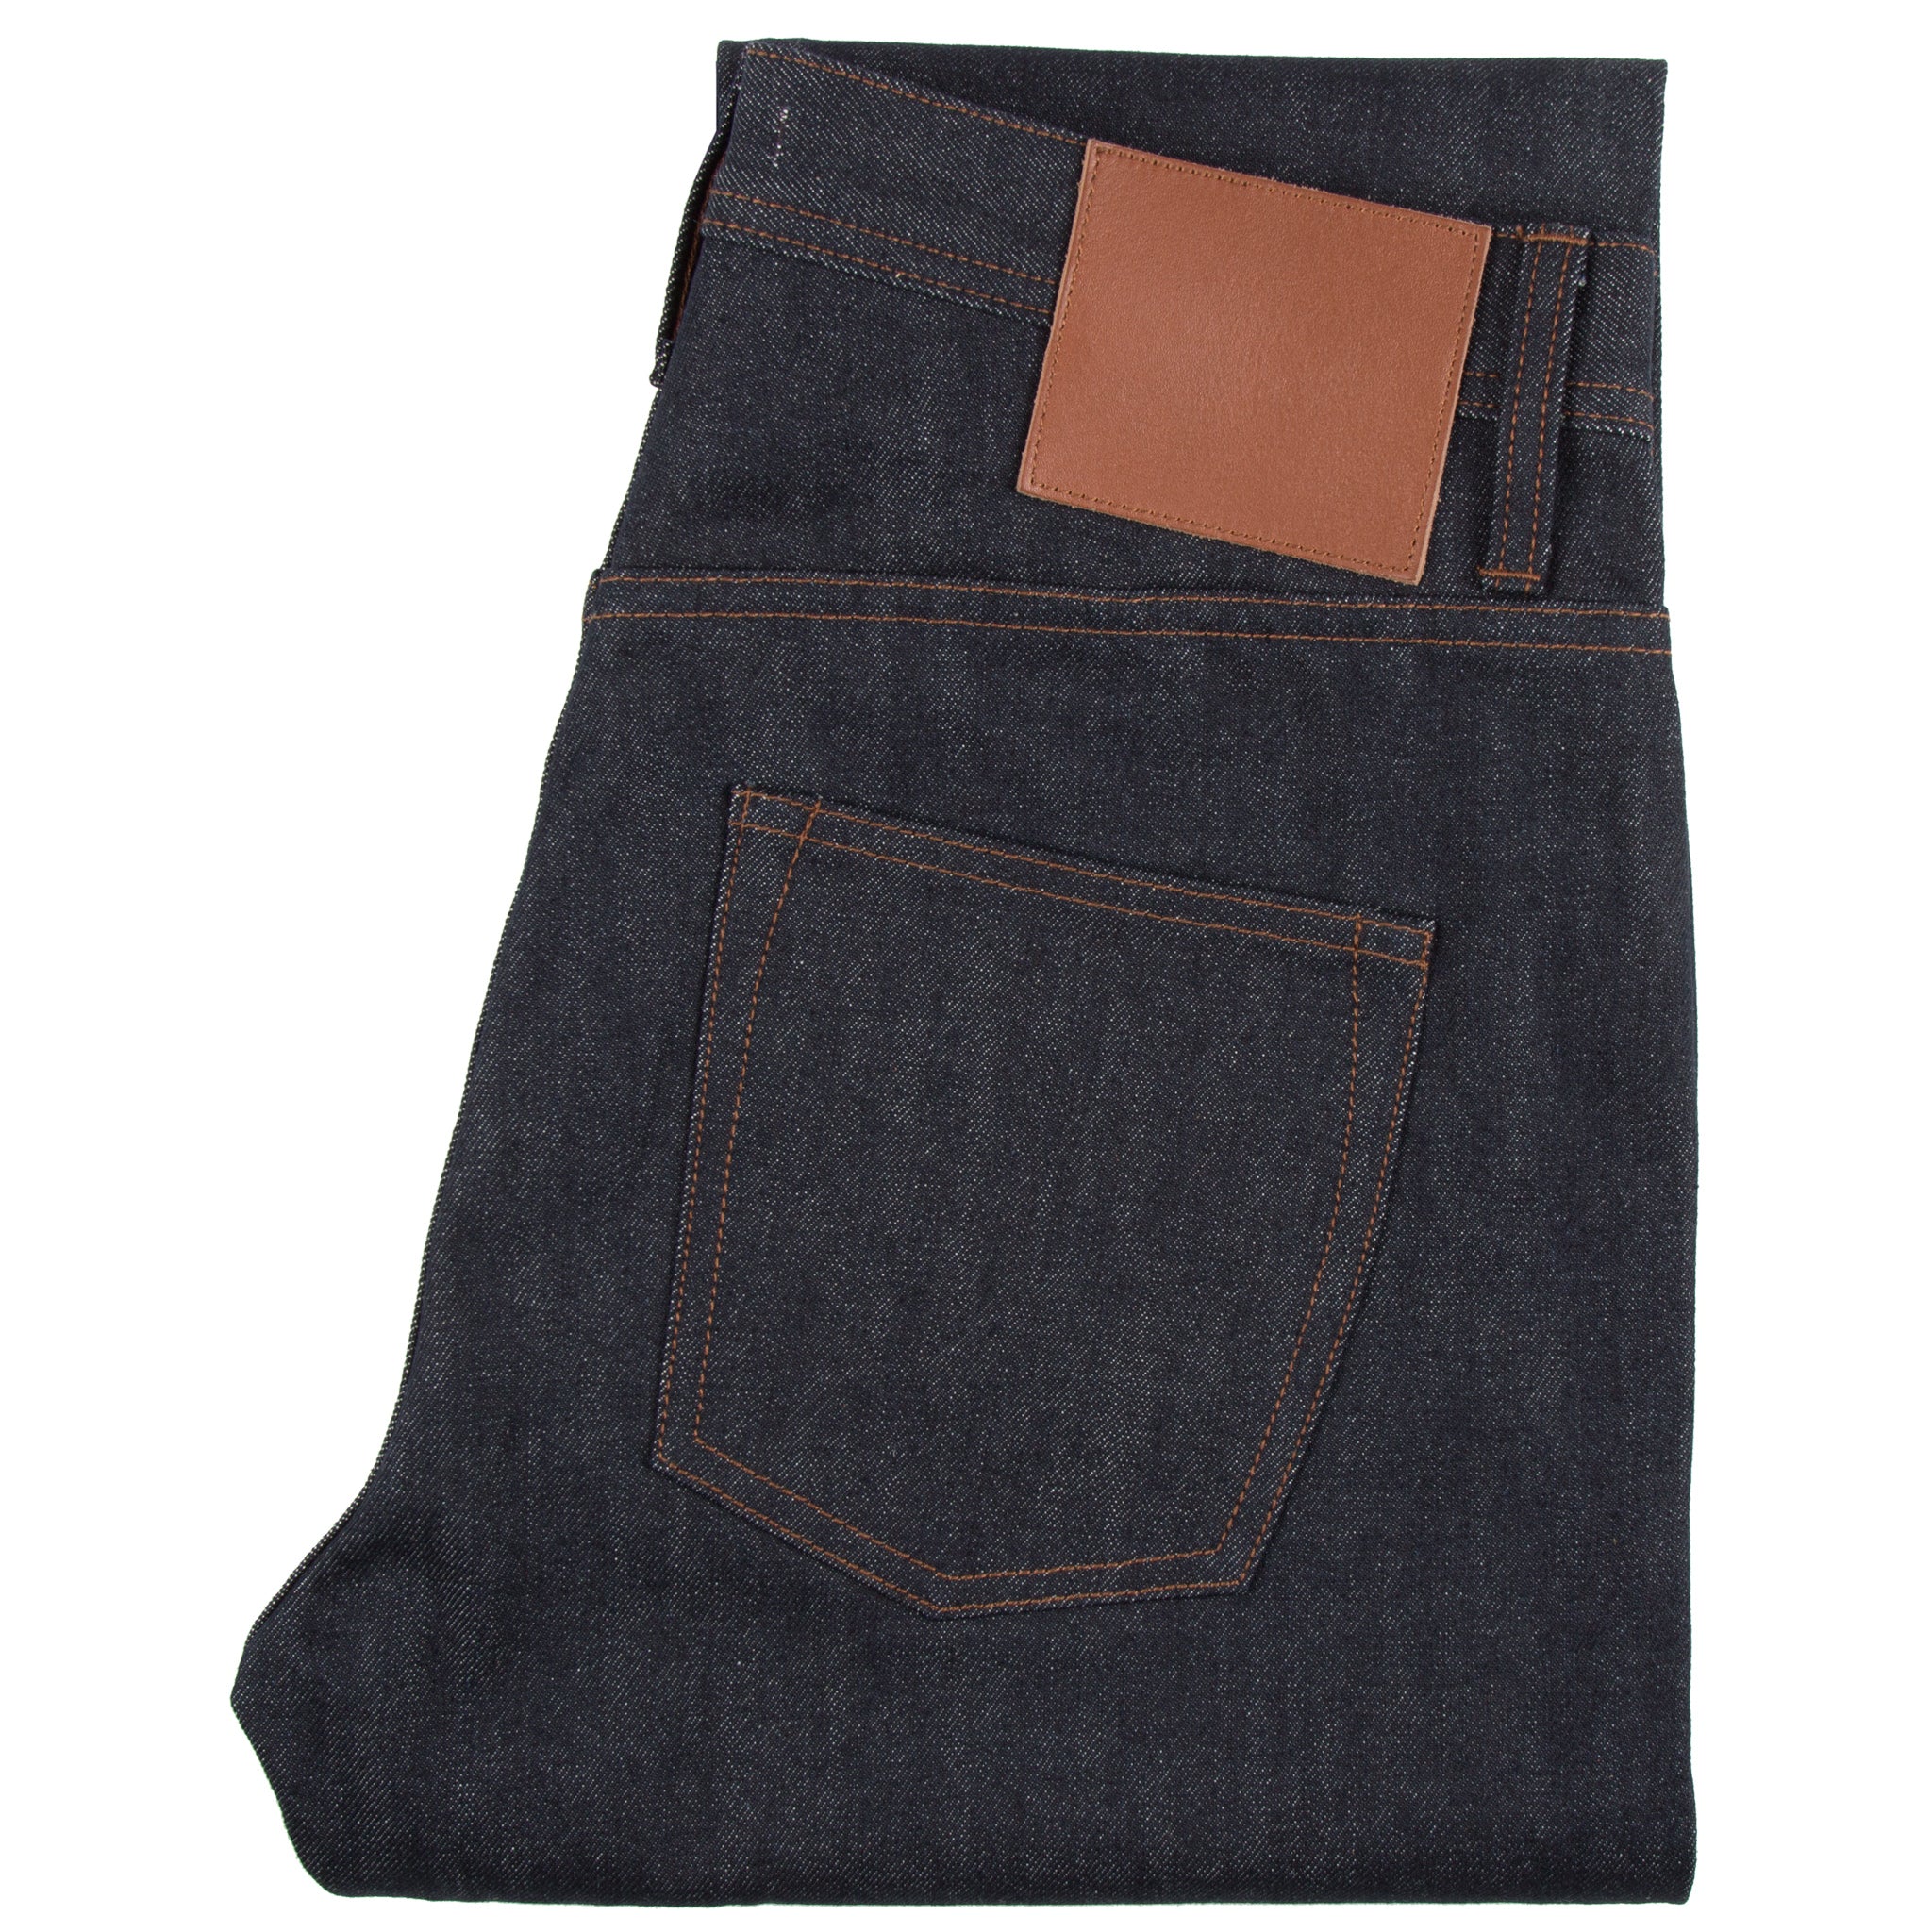 The Unbranded Brand Raw Denim Jeans - Tapered 14.5oz Indigo Selvedge –  Upper Park